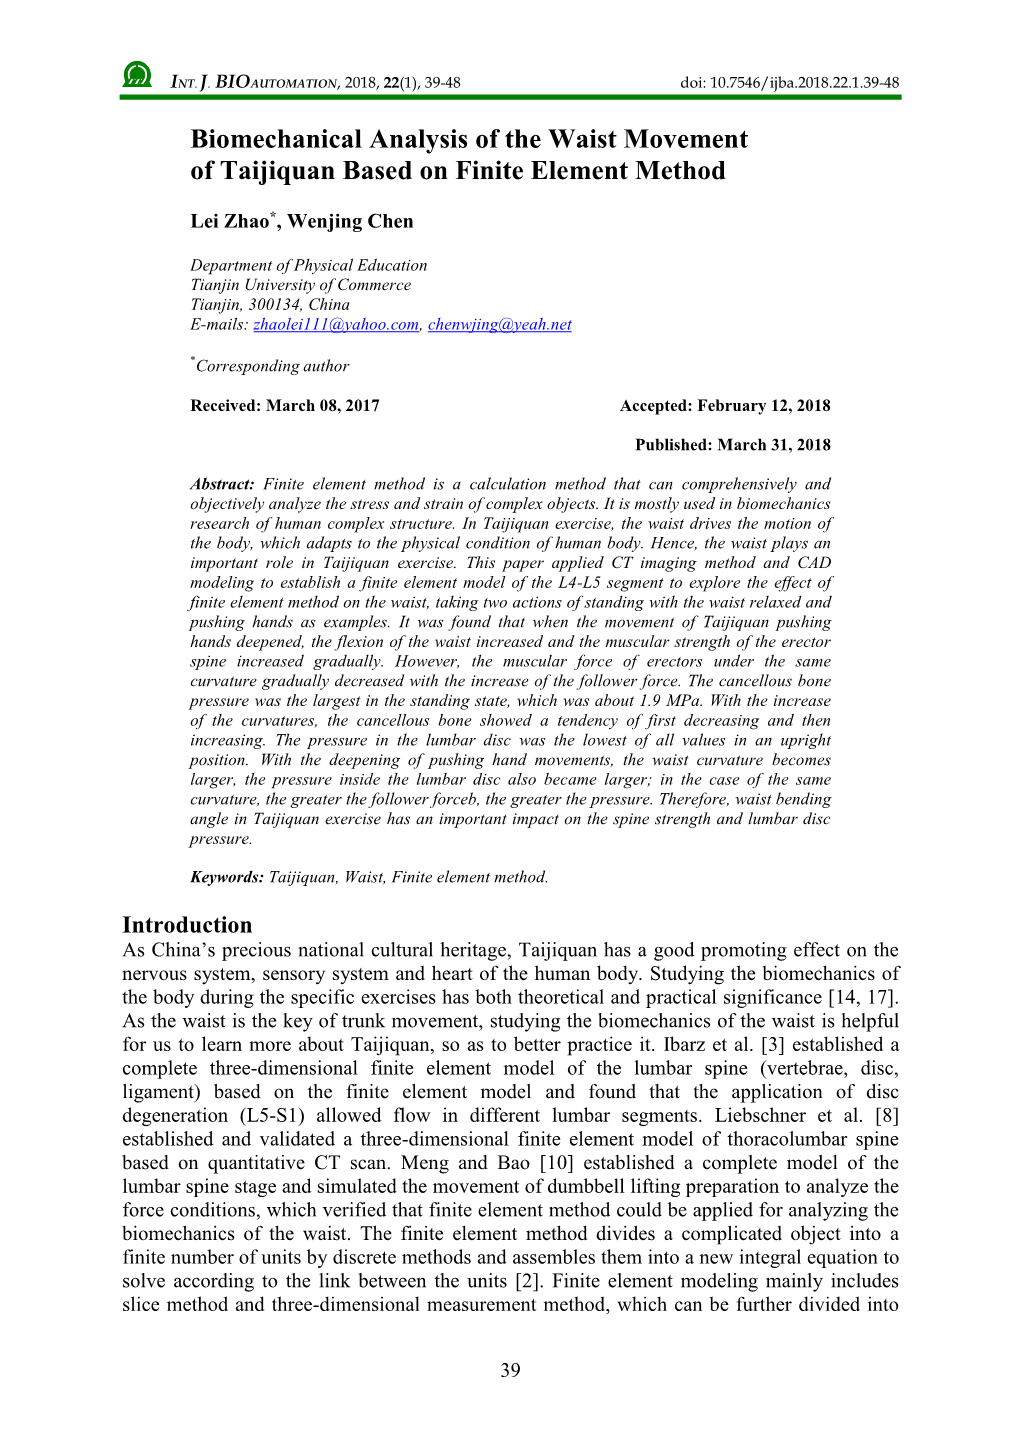 Biomechanical Analysis of the Waist Movement of Taijiquan Based on Finite Element Method